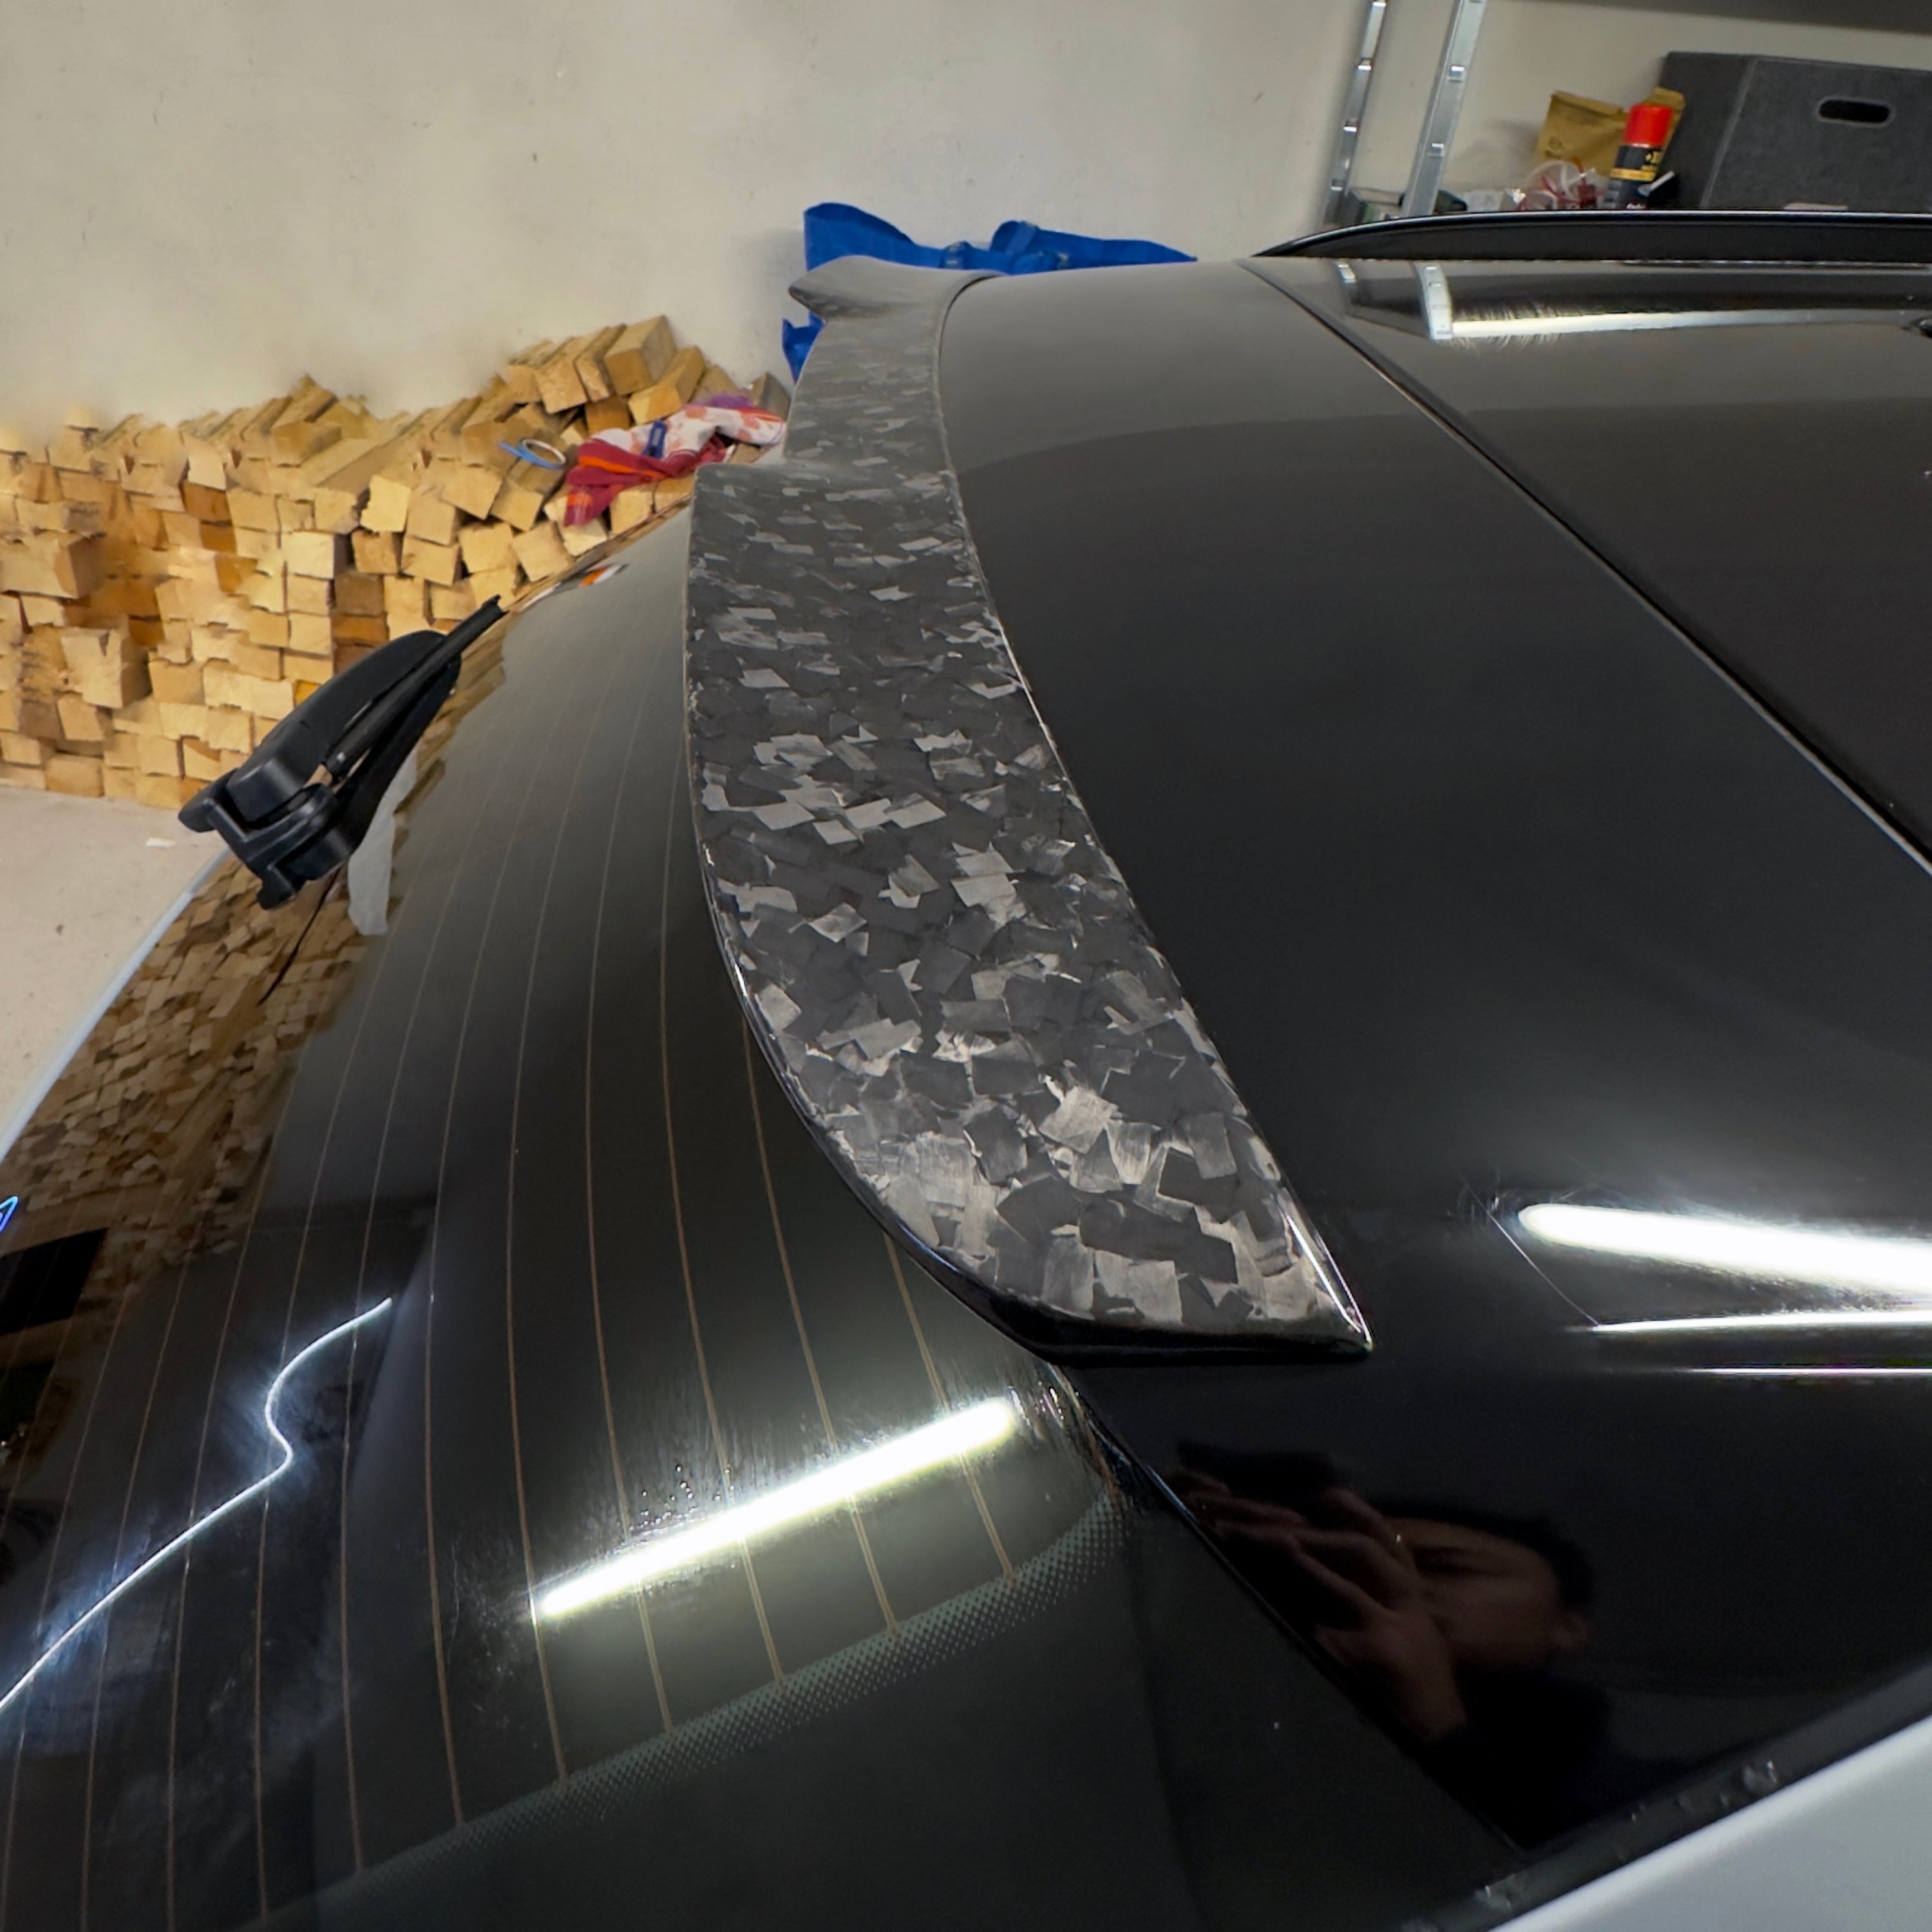 MAX CARBON Performance Dry Carbon Heck Spoiler für BMW M3 G81 Touring G21 M340i